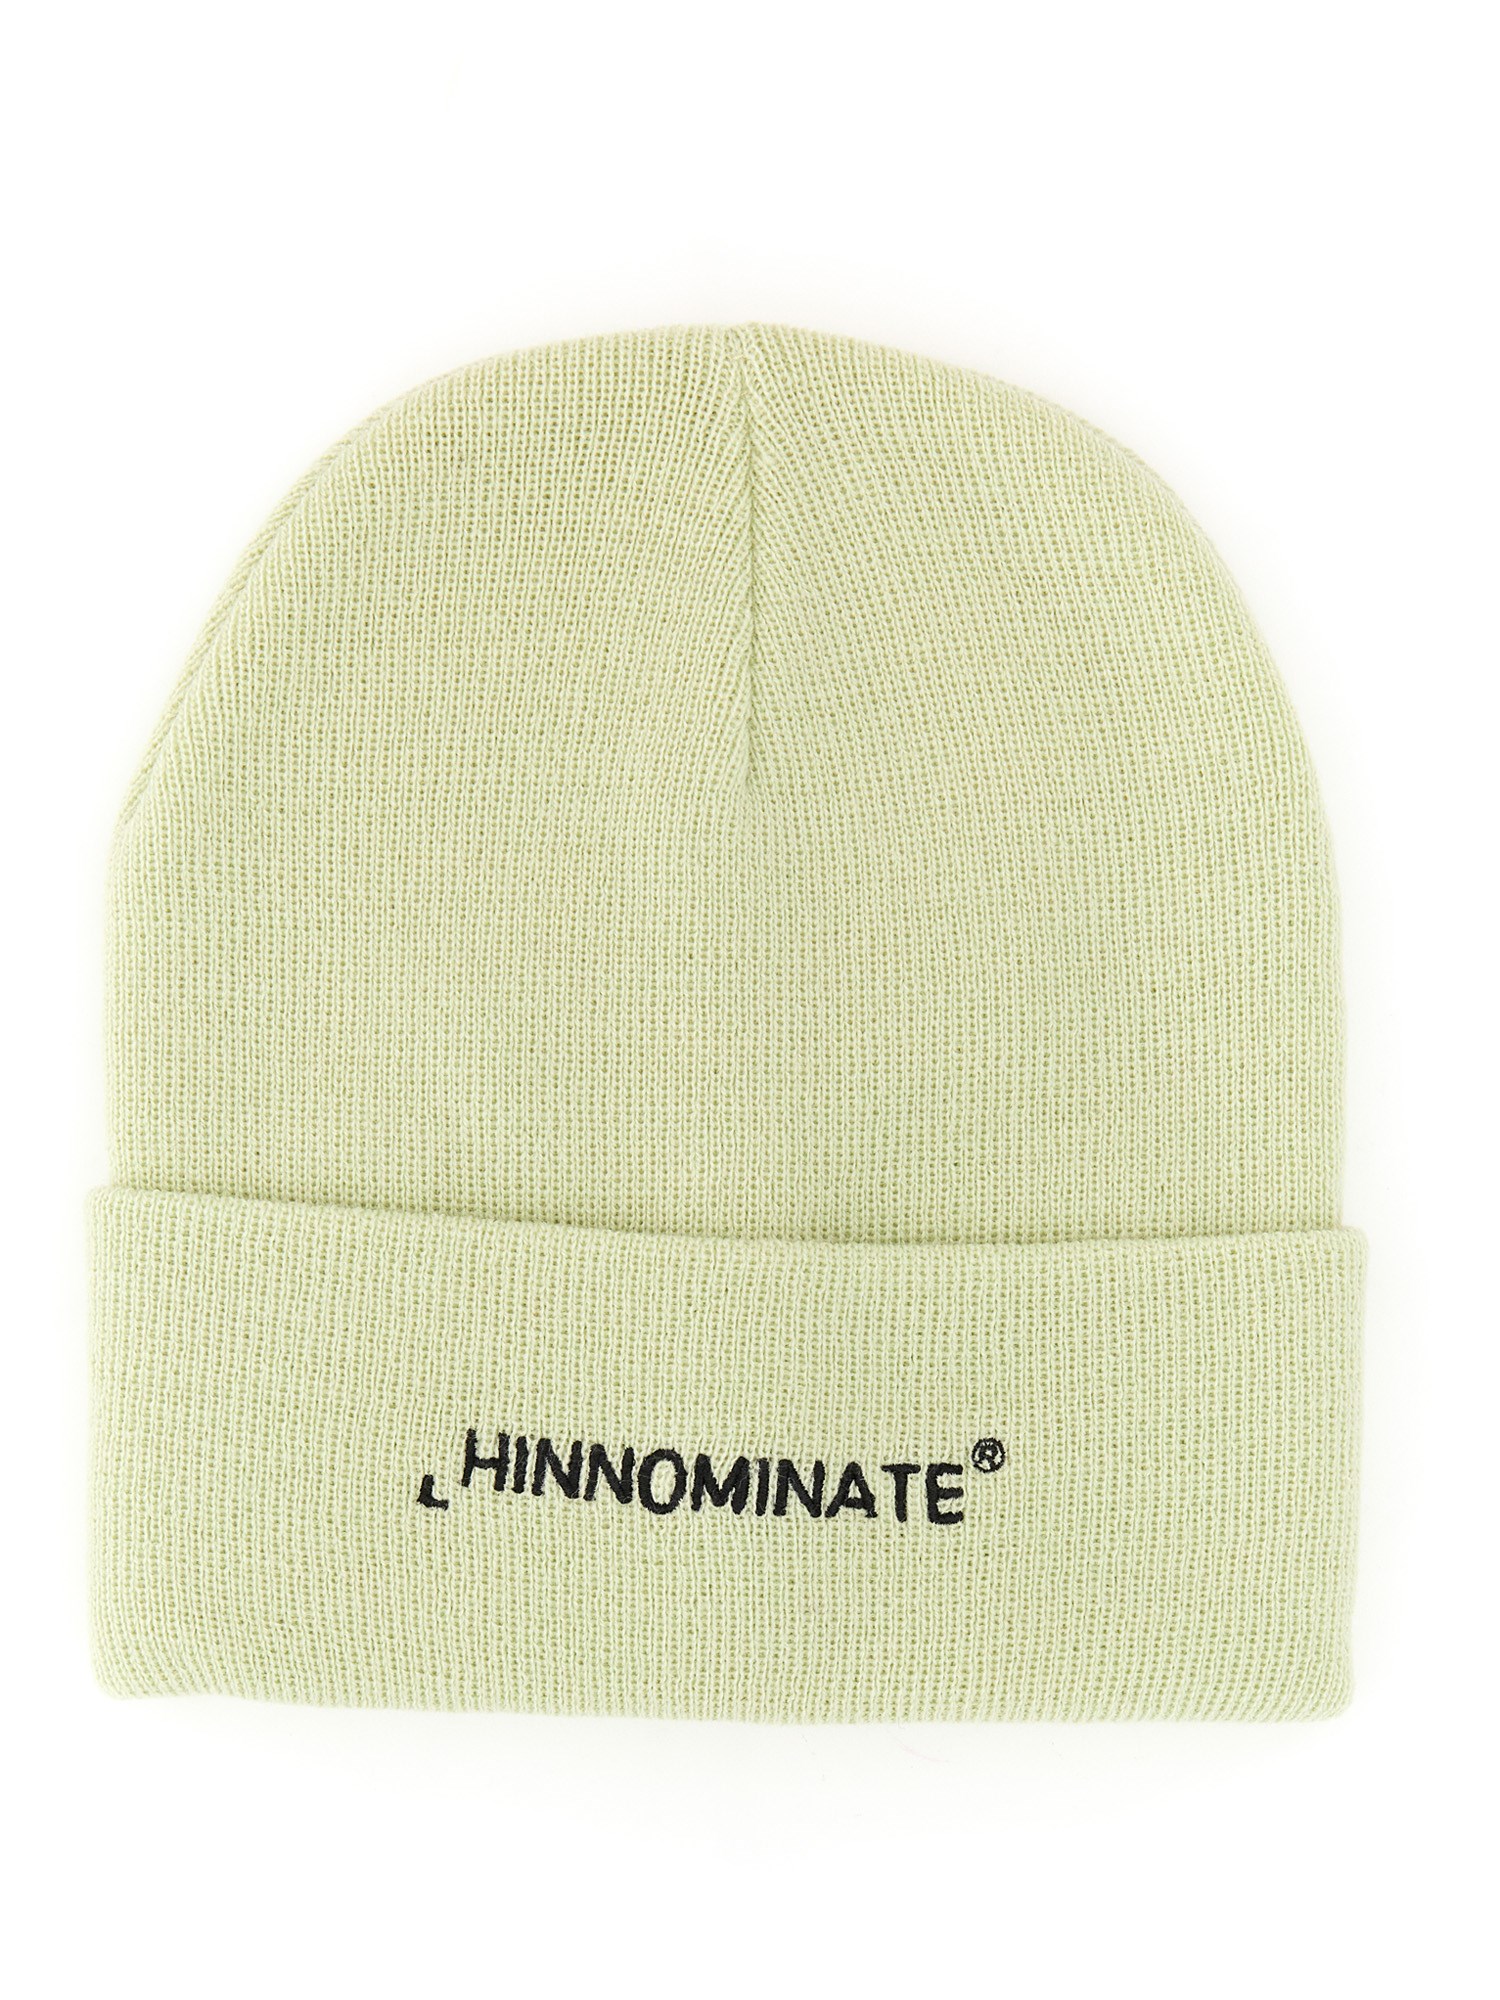 hinnominate hinnominate hat with logo